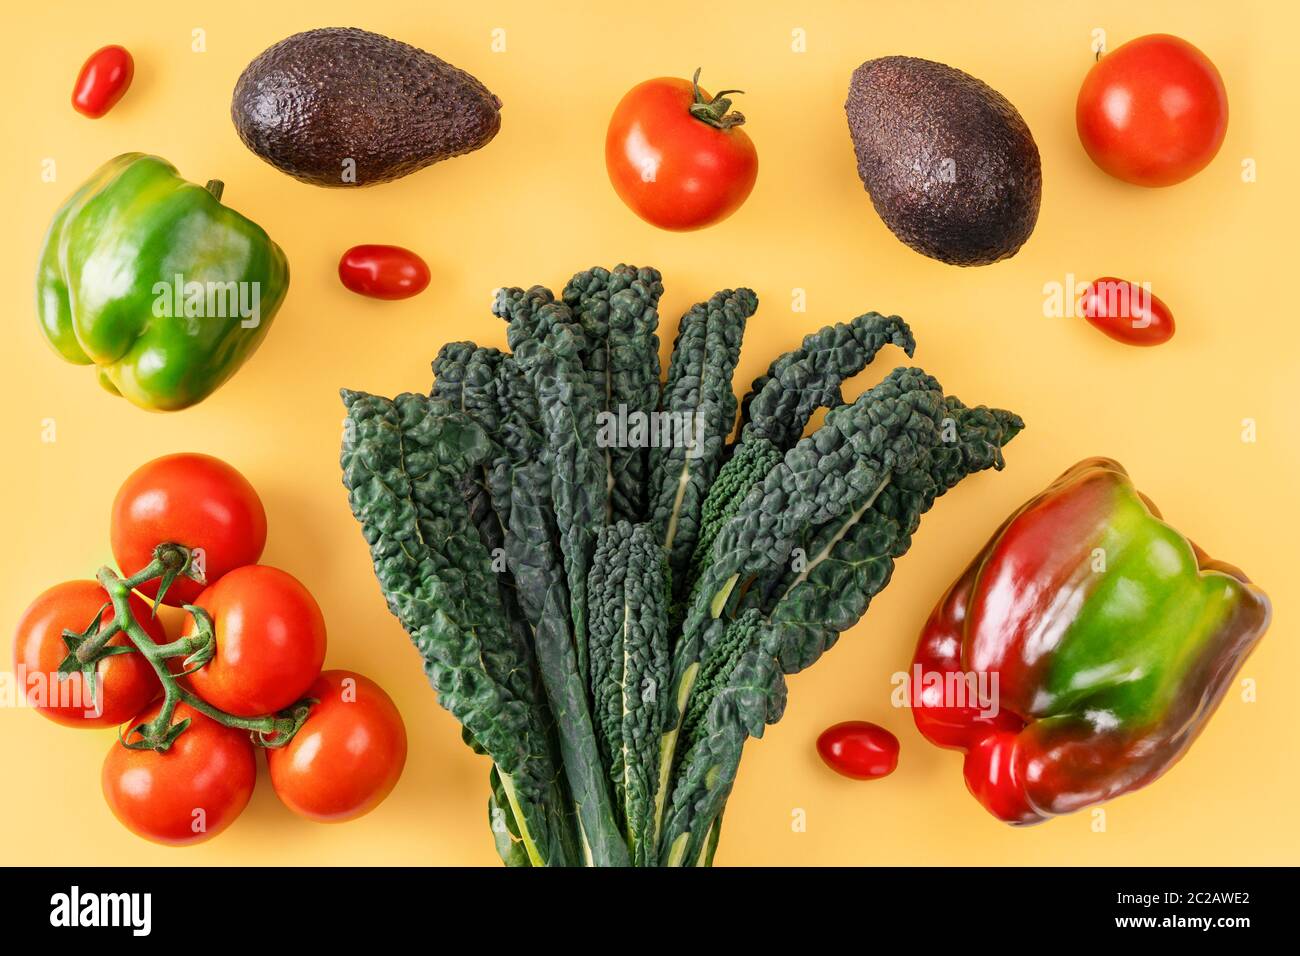 Black curly italian kale, tomatoes, avocado, pepper on orange background. Stock Photo